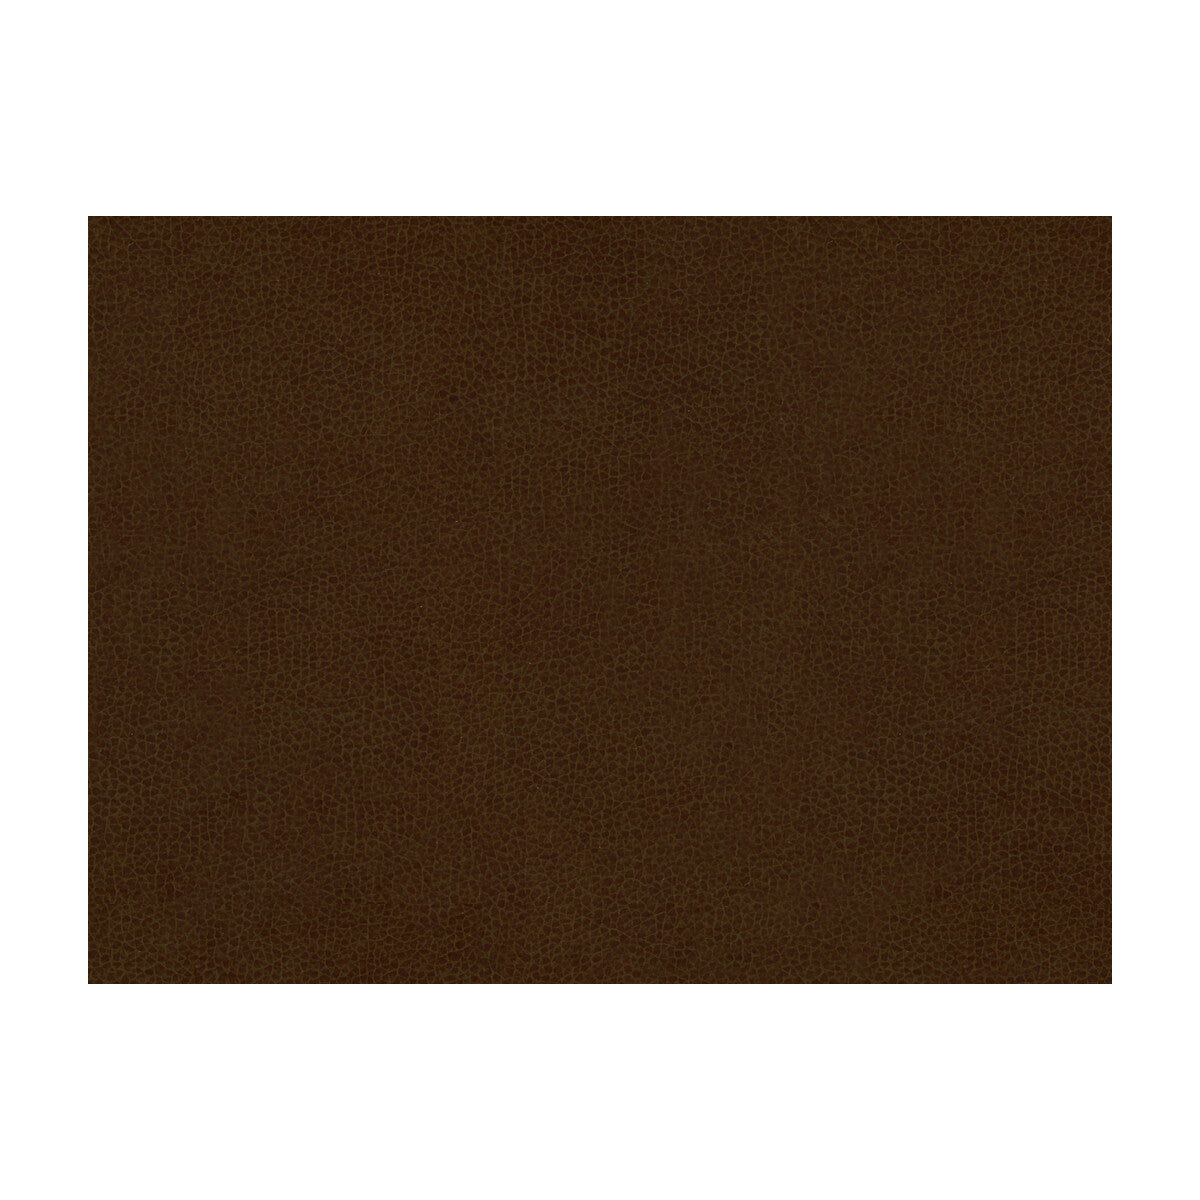 Abilene fabric in cocoa color - pattern ABILENE.6.0 - by Kravet Contract